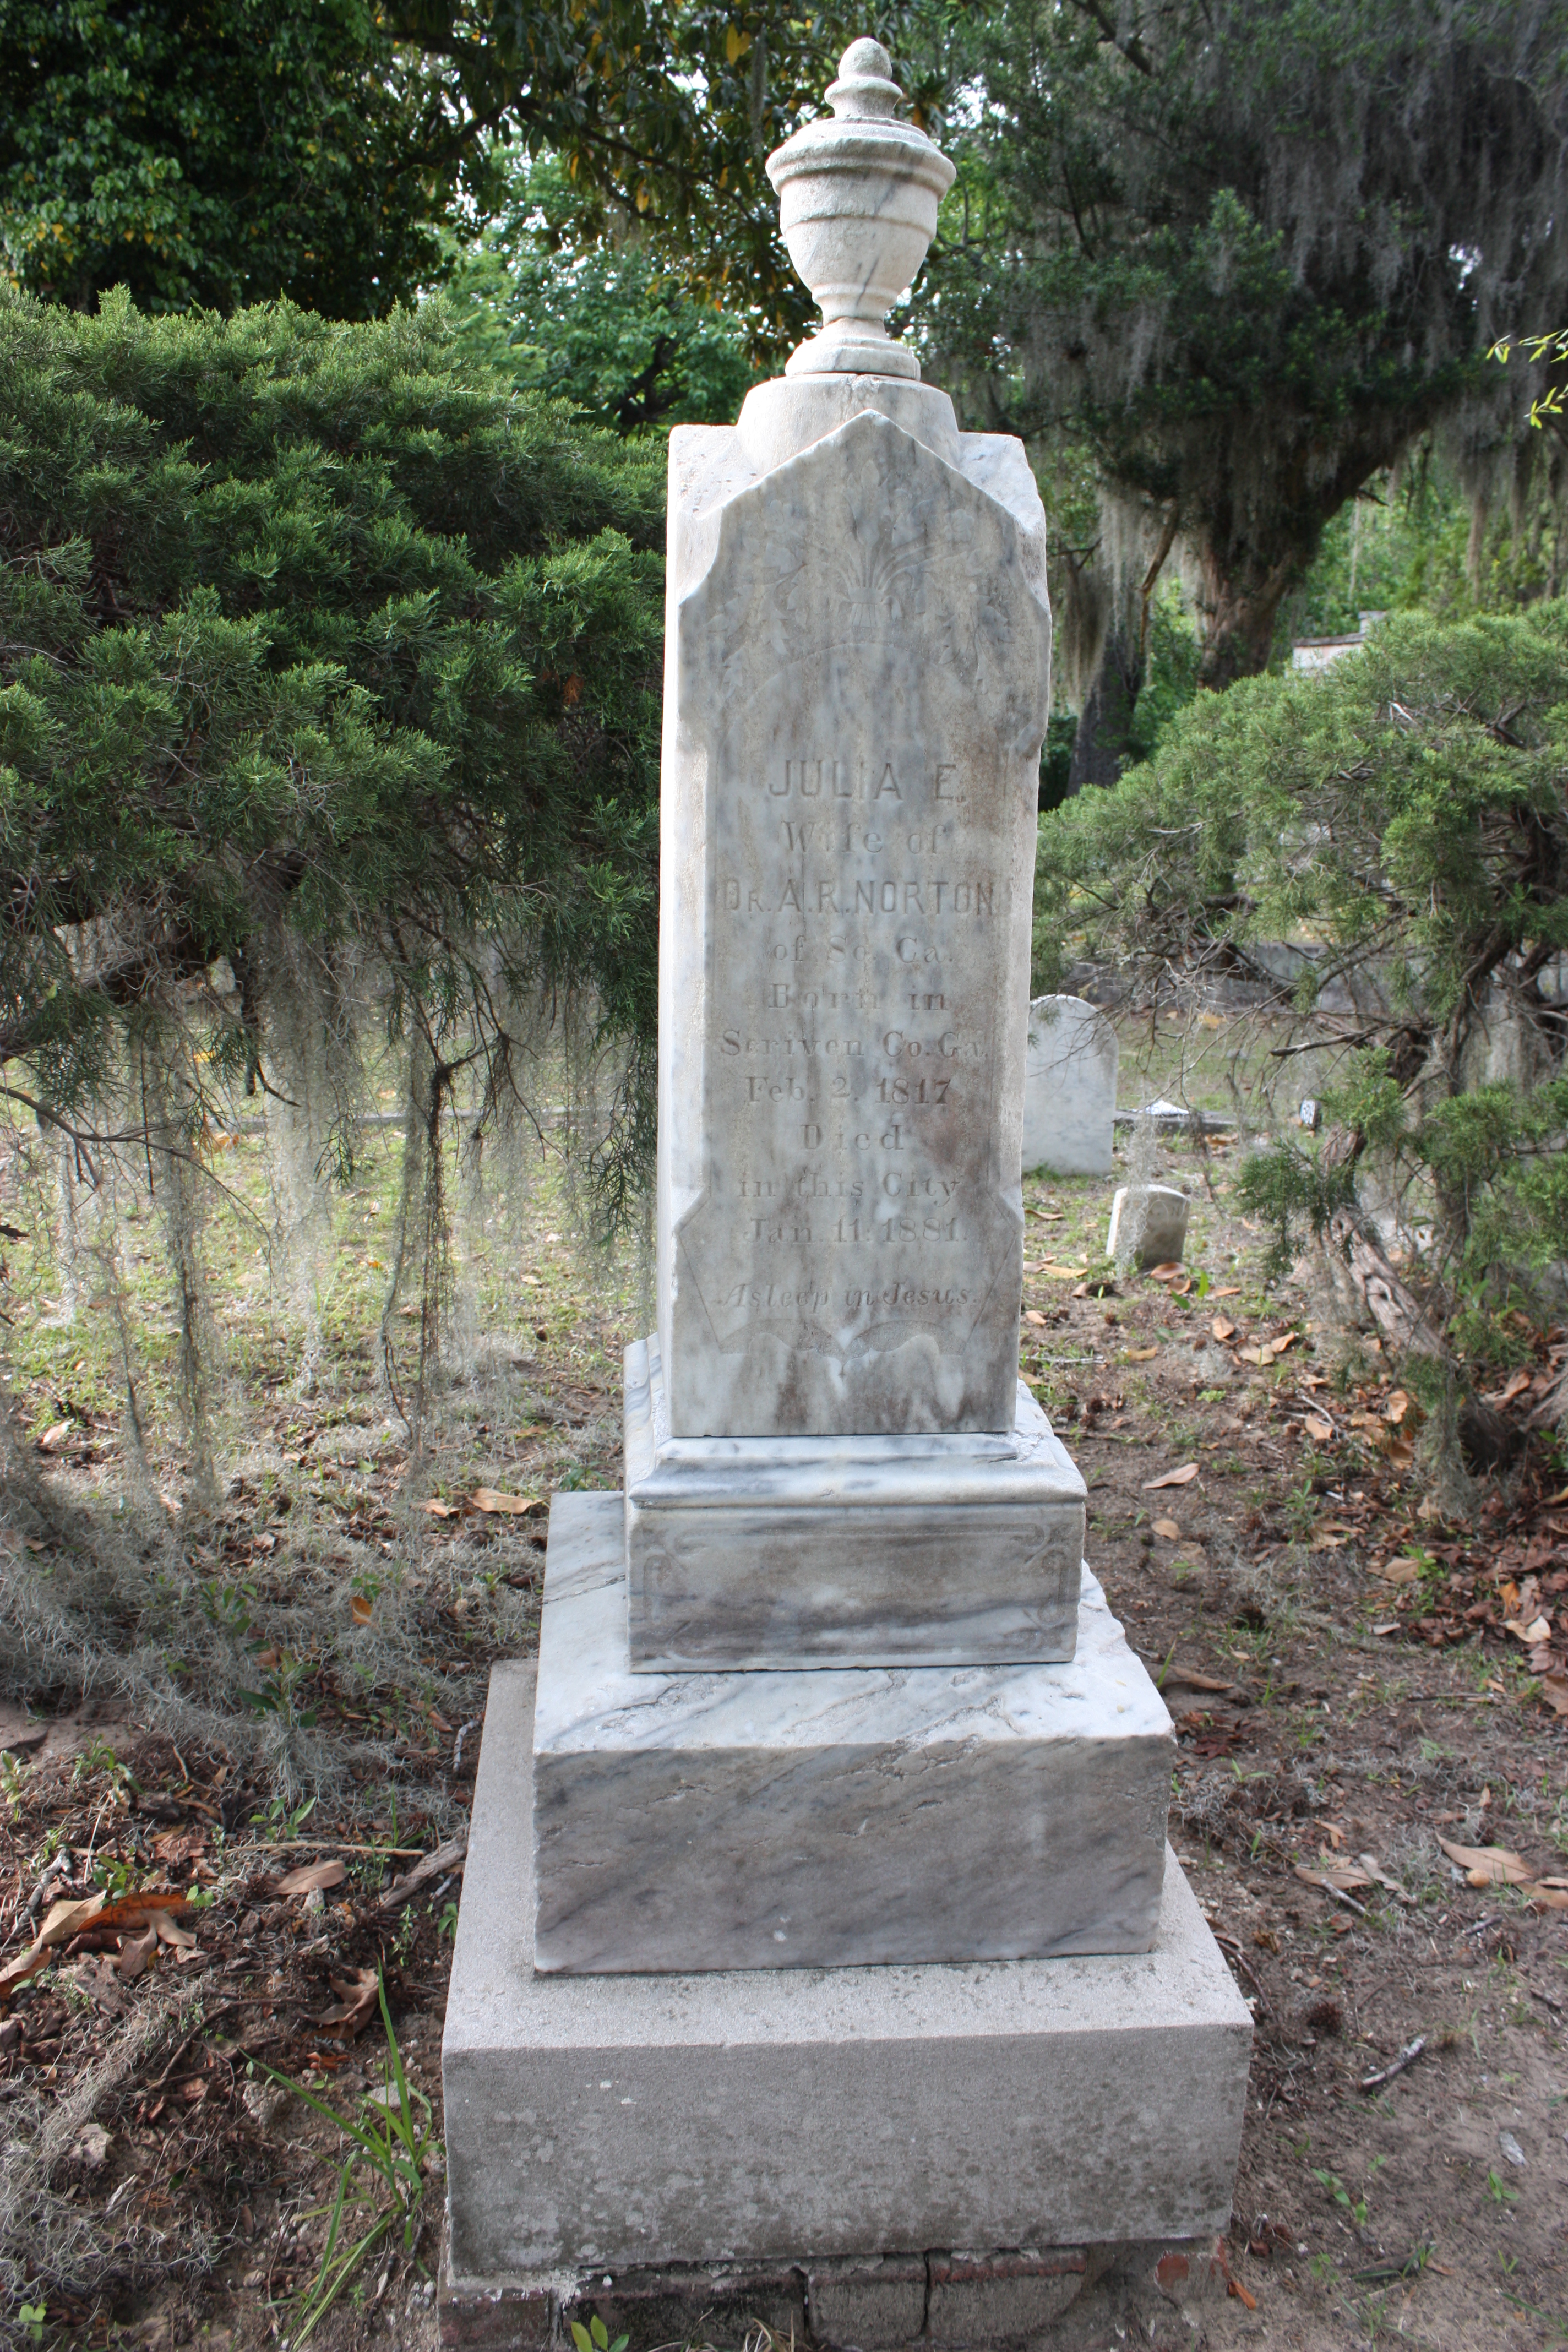 Grave of Julia Elizabeth Greene Norton, 1817-1888, Laurel Grove Cemetery, Savannah Georgia.